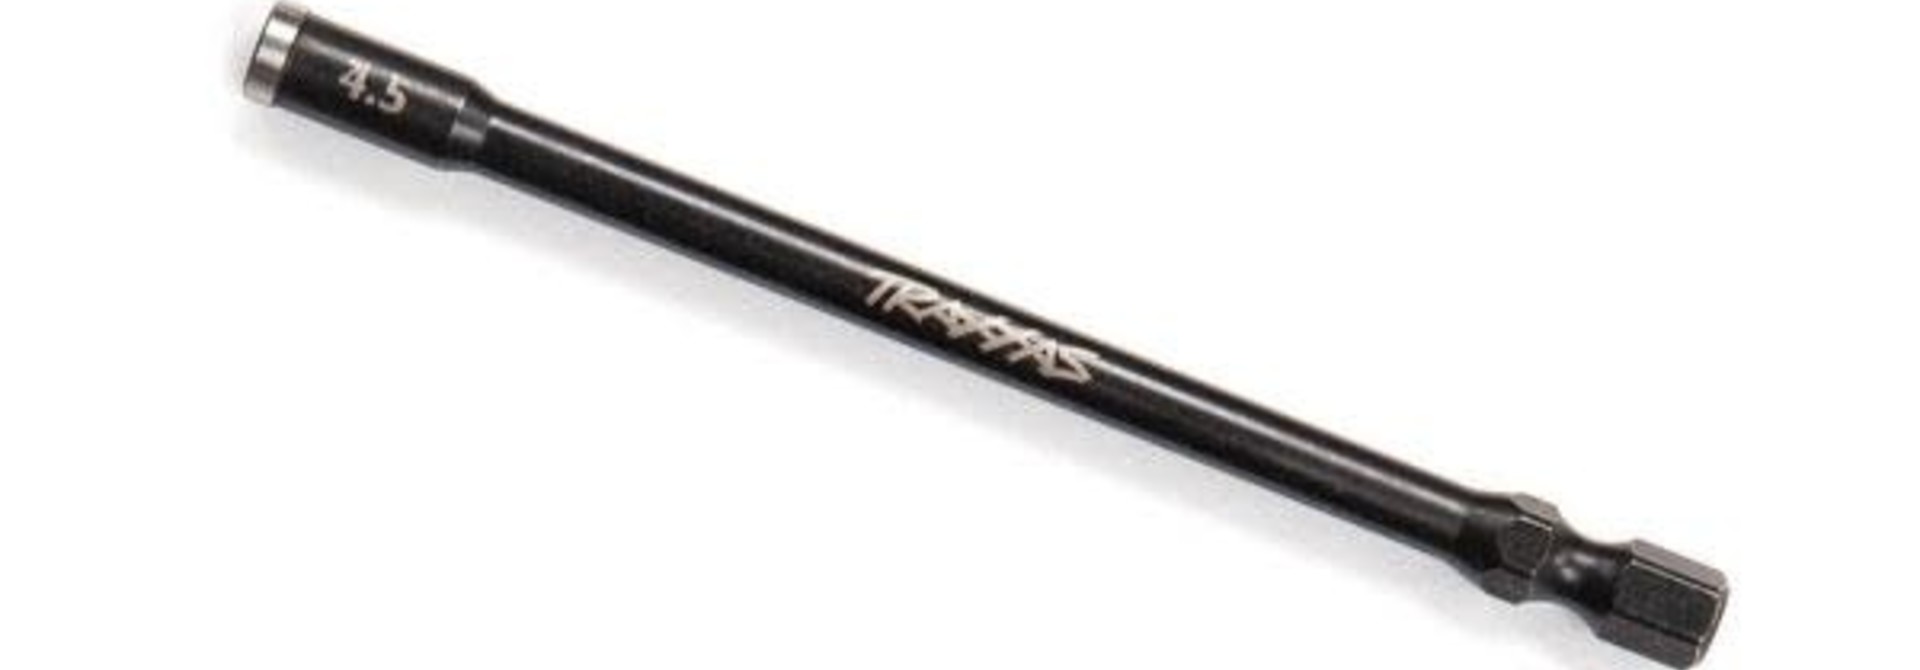 Traxxas Speed bit, nut driver, 4.5mm, TRX8719-45